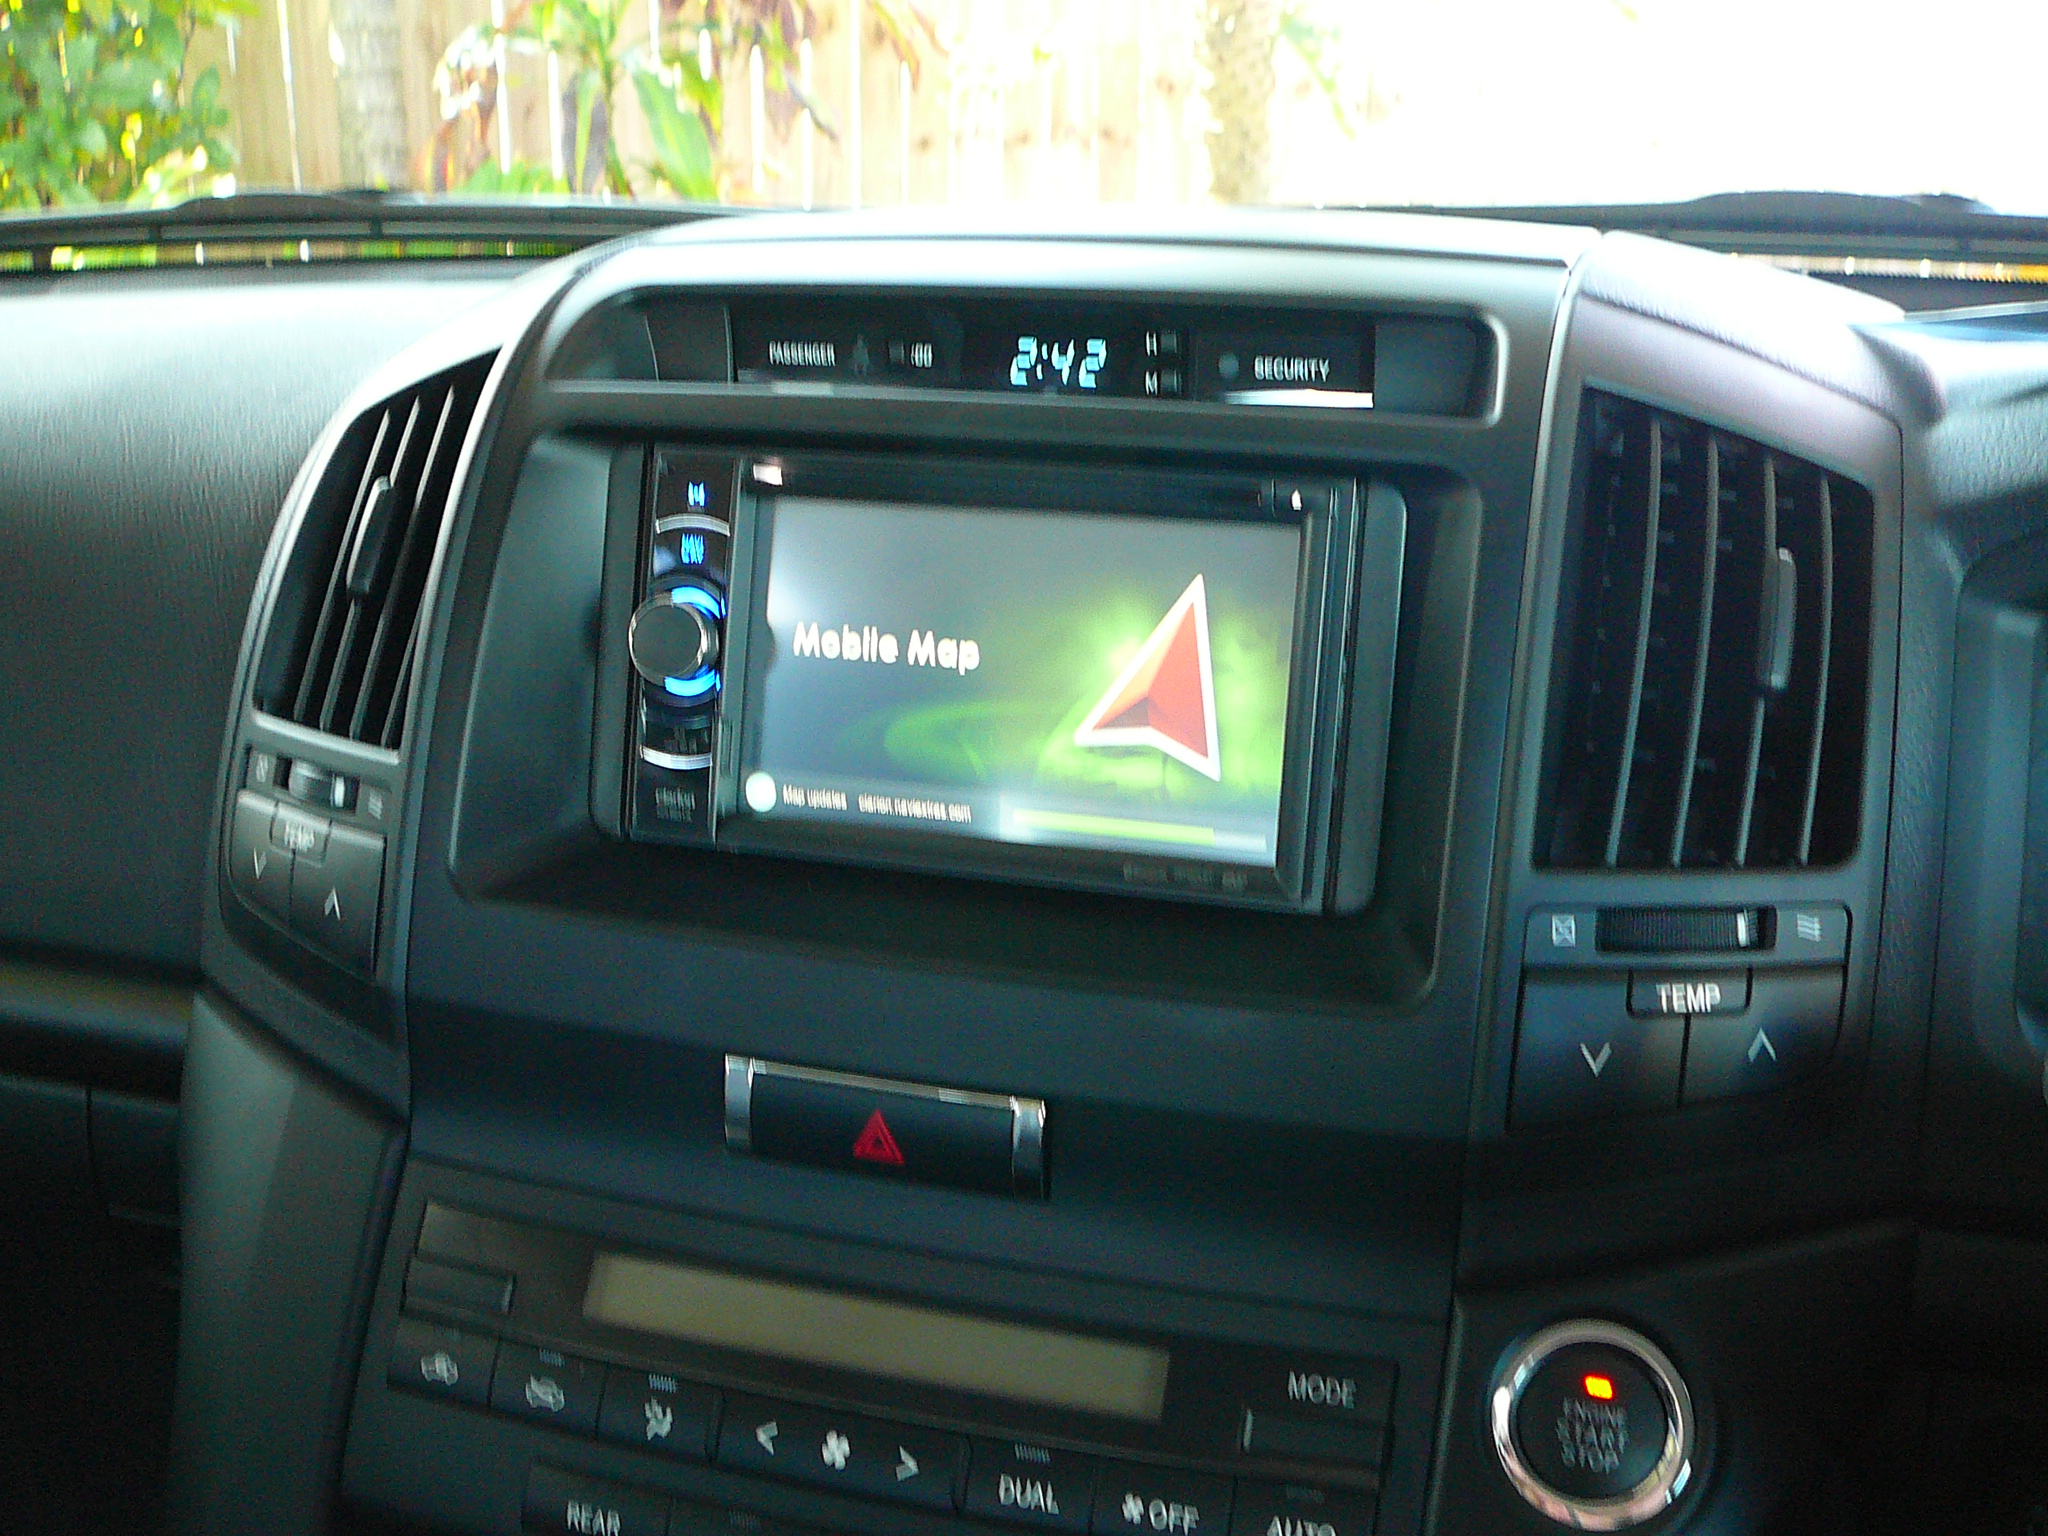 Toyota Landcruiser 2010 200 Series Navigaiton, Bluetooth Hands Free, Reverse Camera